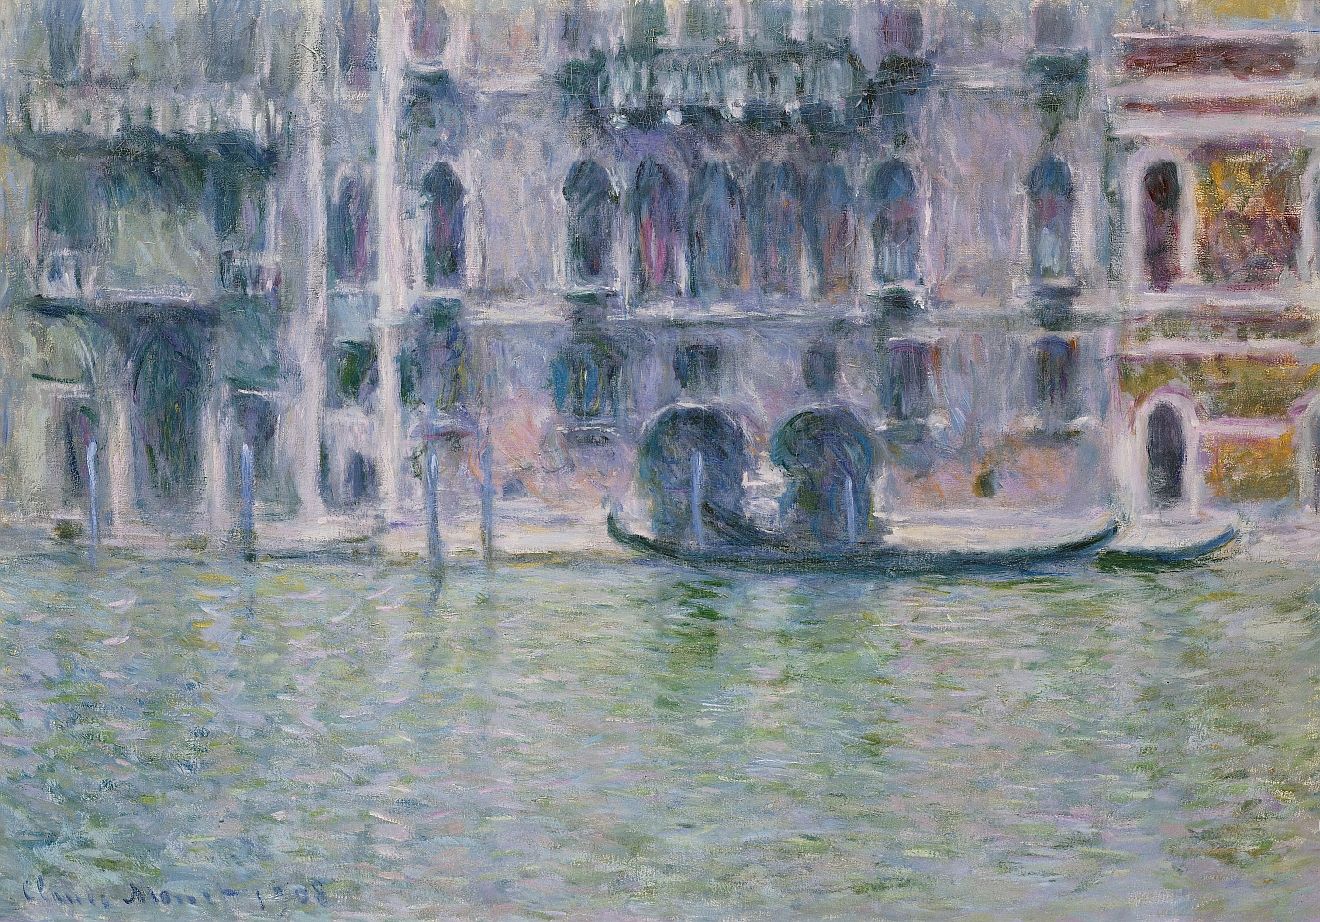 Claude+Monet-1840-1926 (558).jpg